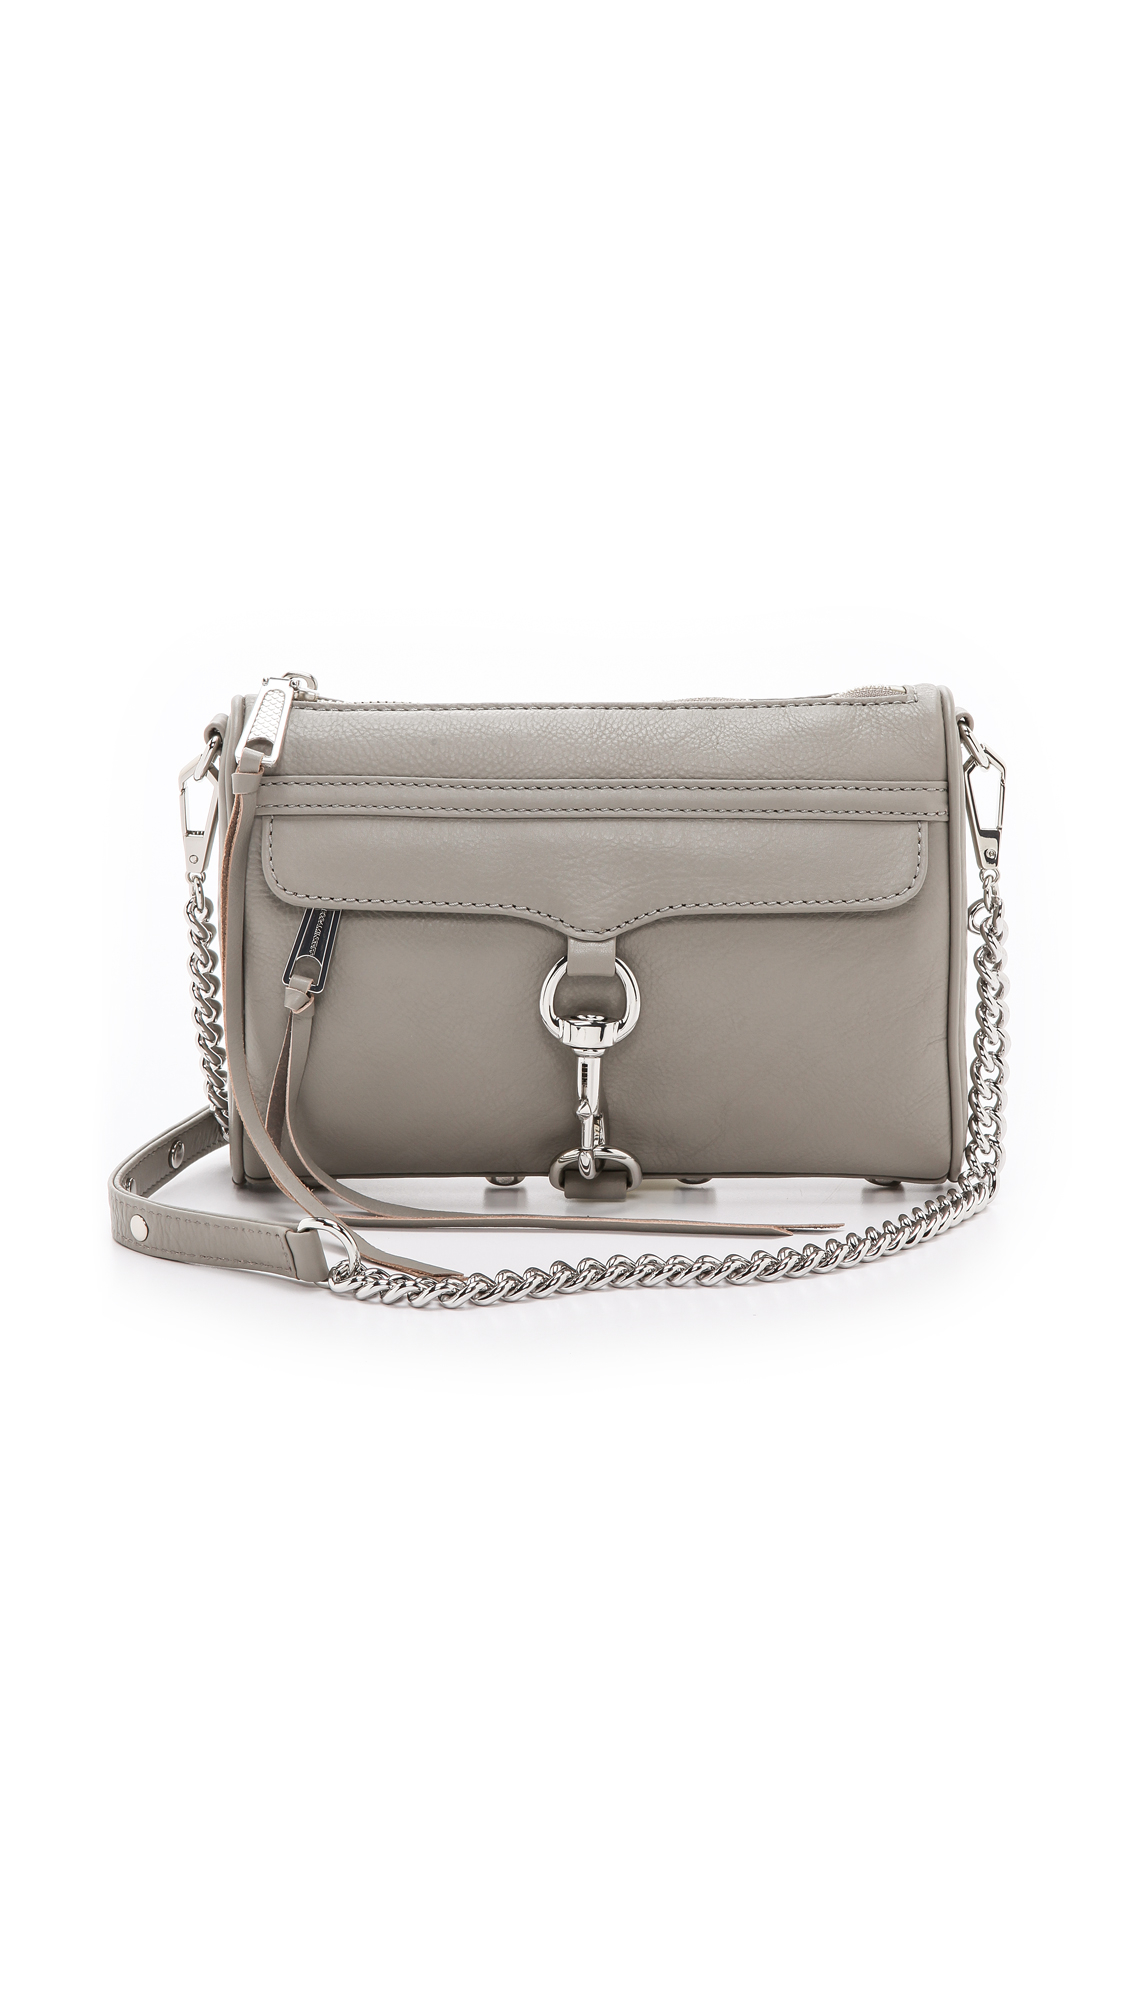 Lyst - Rebecca Minkoff Mini Mac Bag Soft Grey in Gray